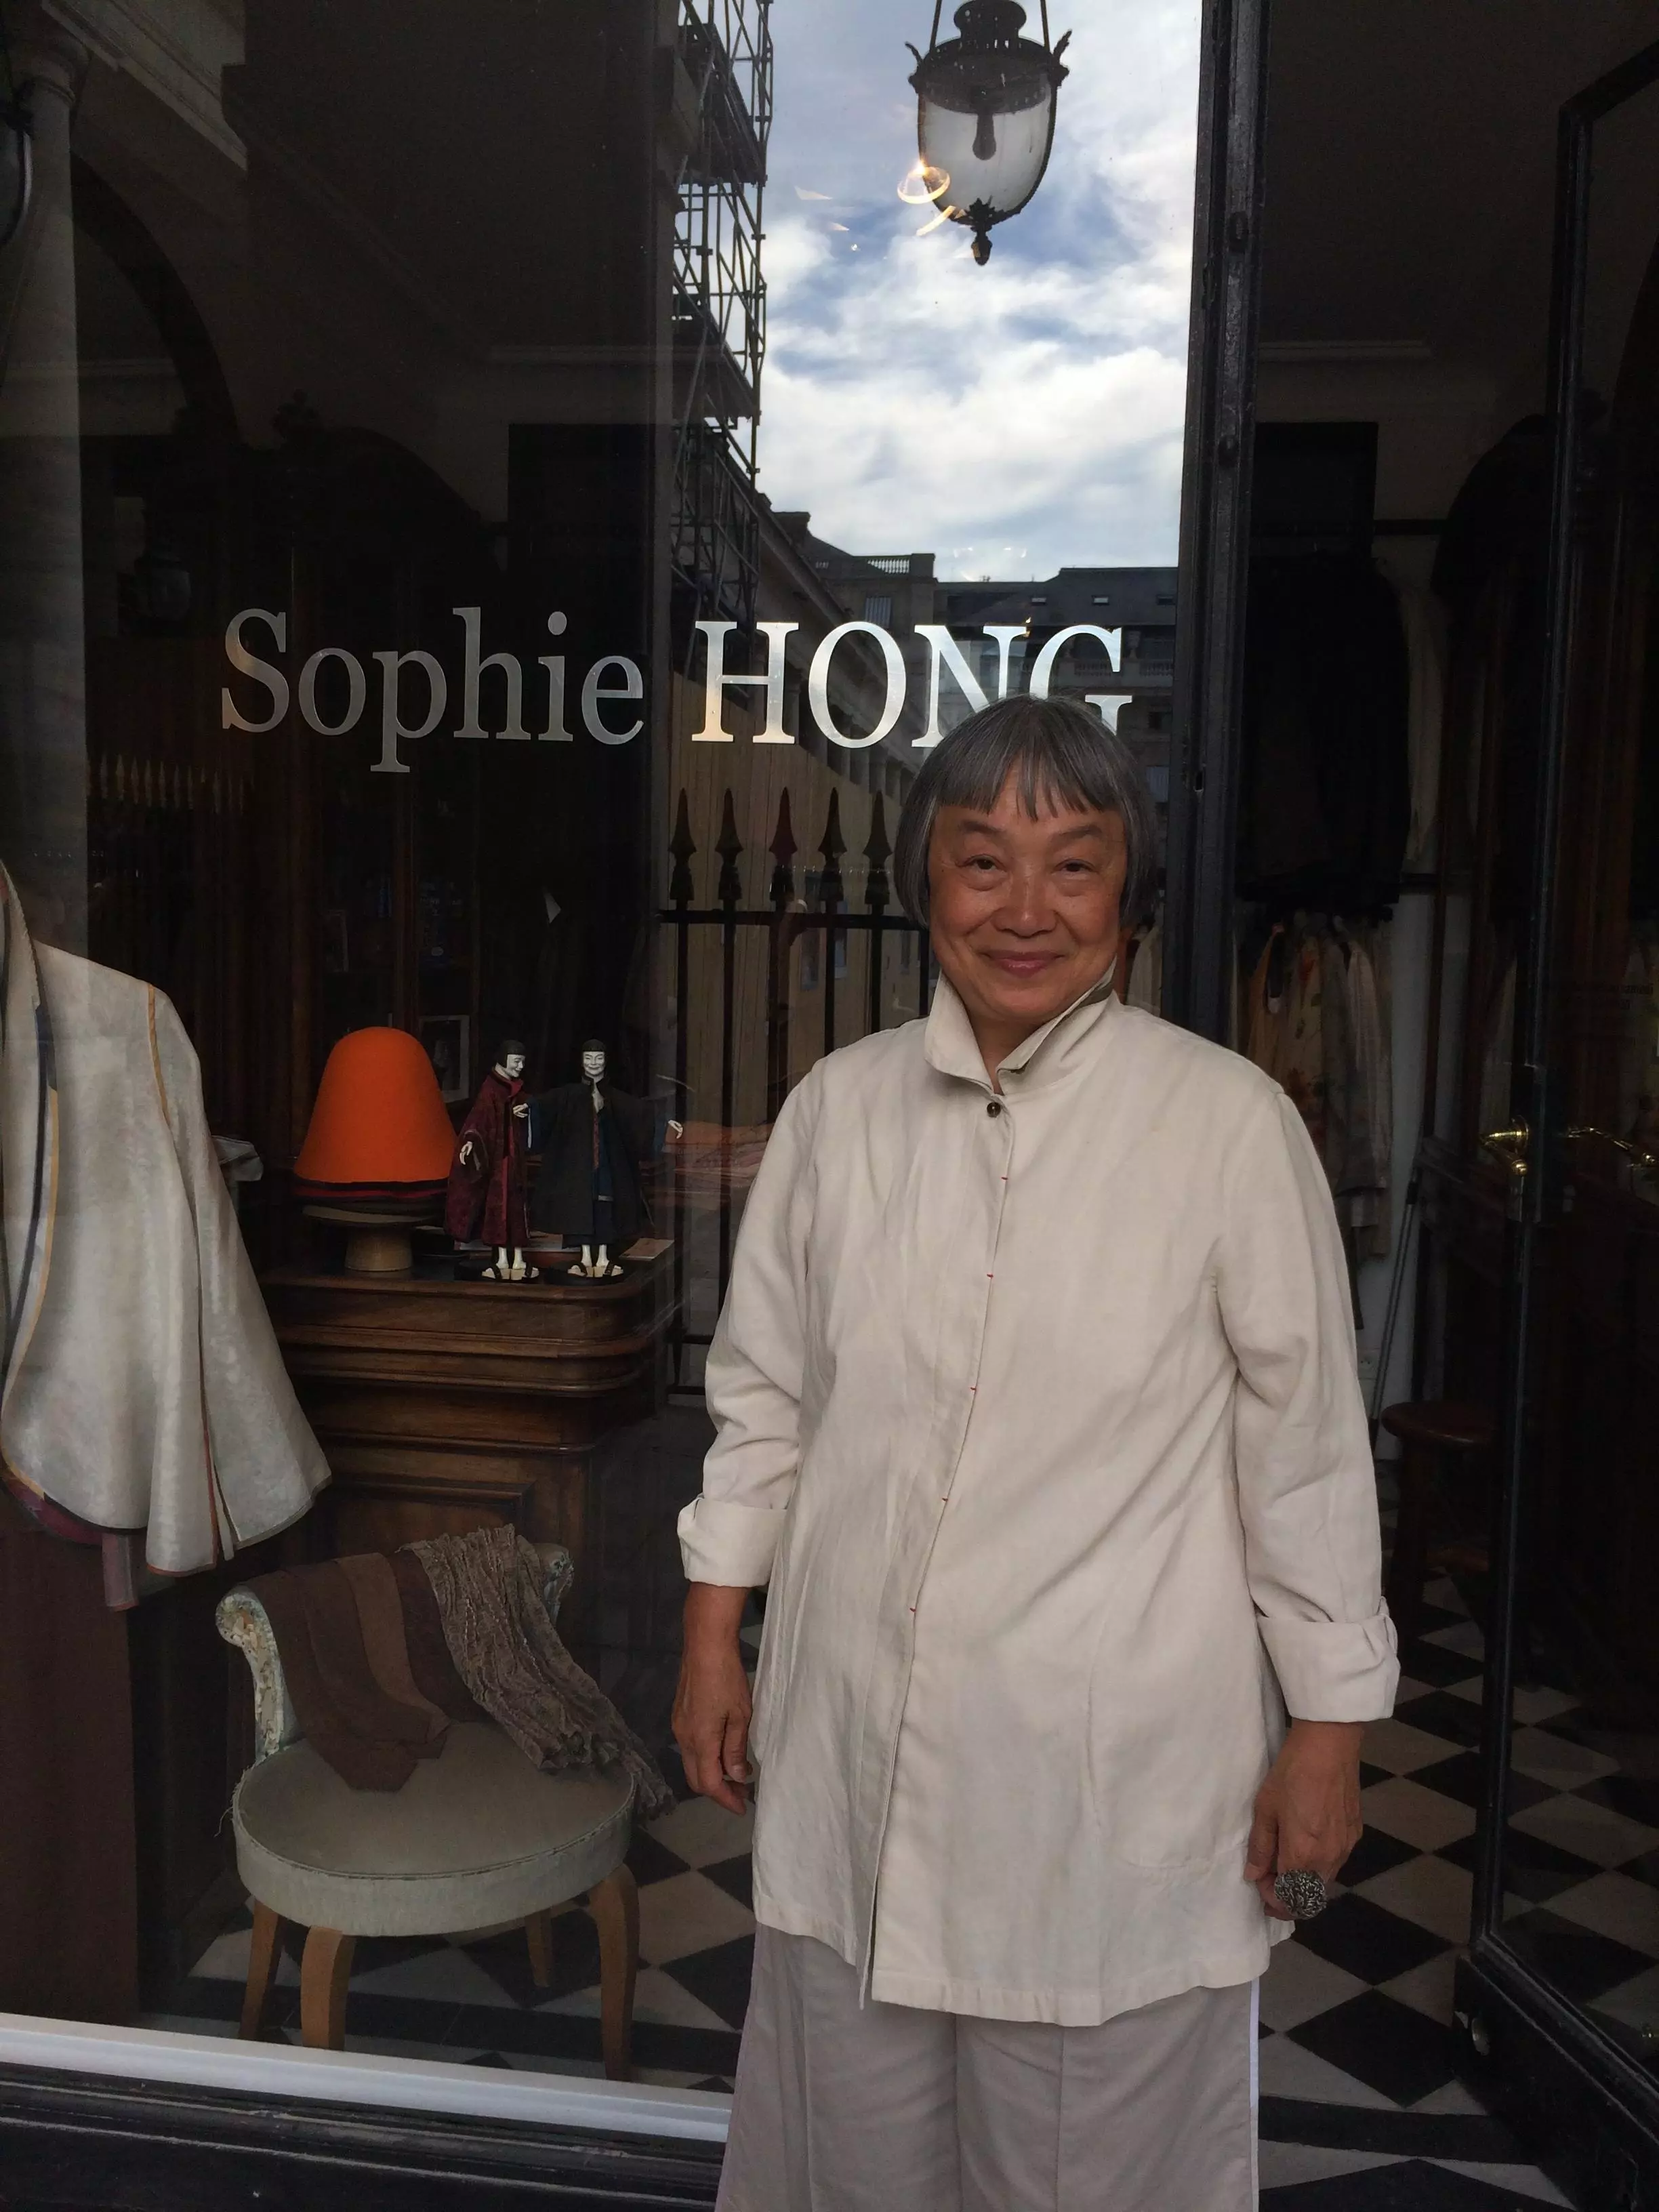 洪麗芬Sophie Hong 在她位於Palais Royal的店前 @RFI @Sophie Hong